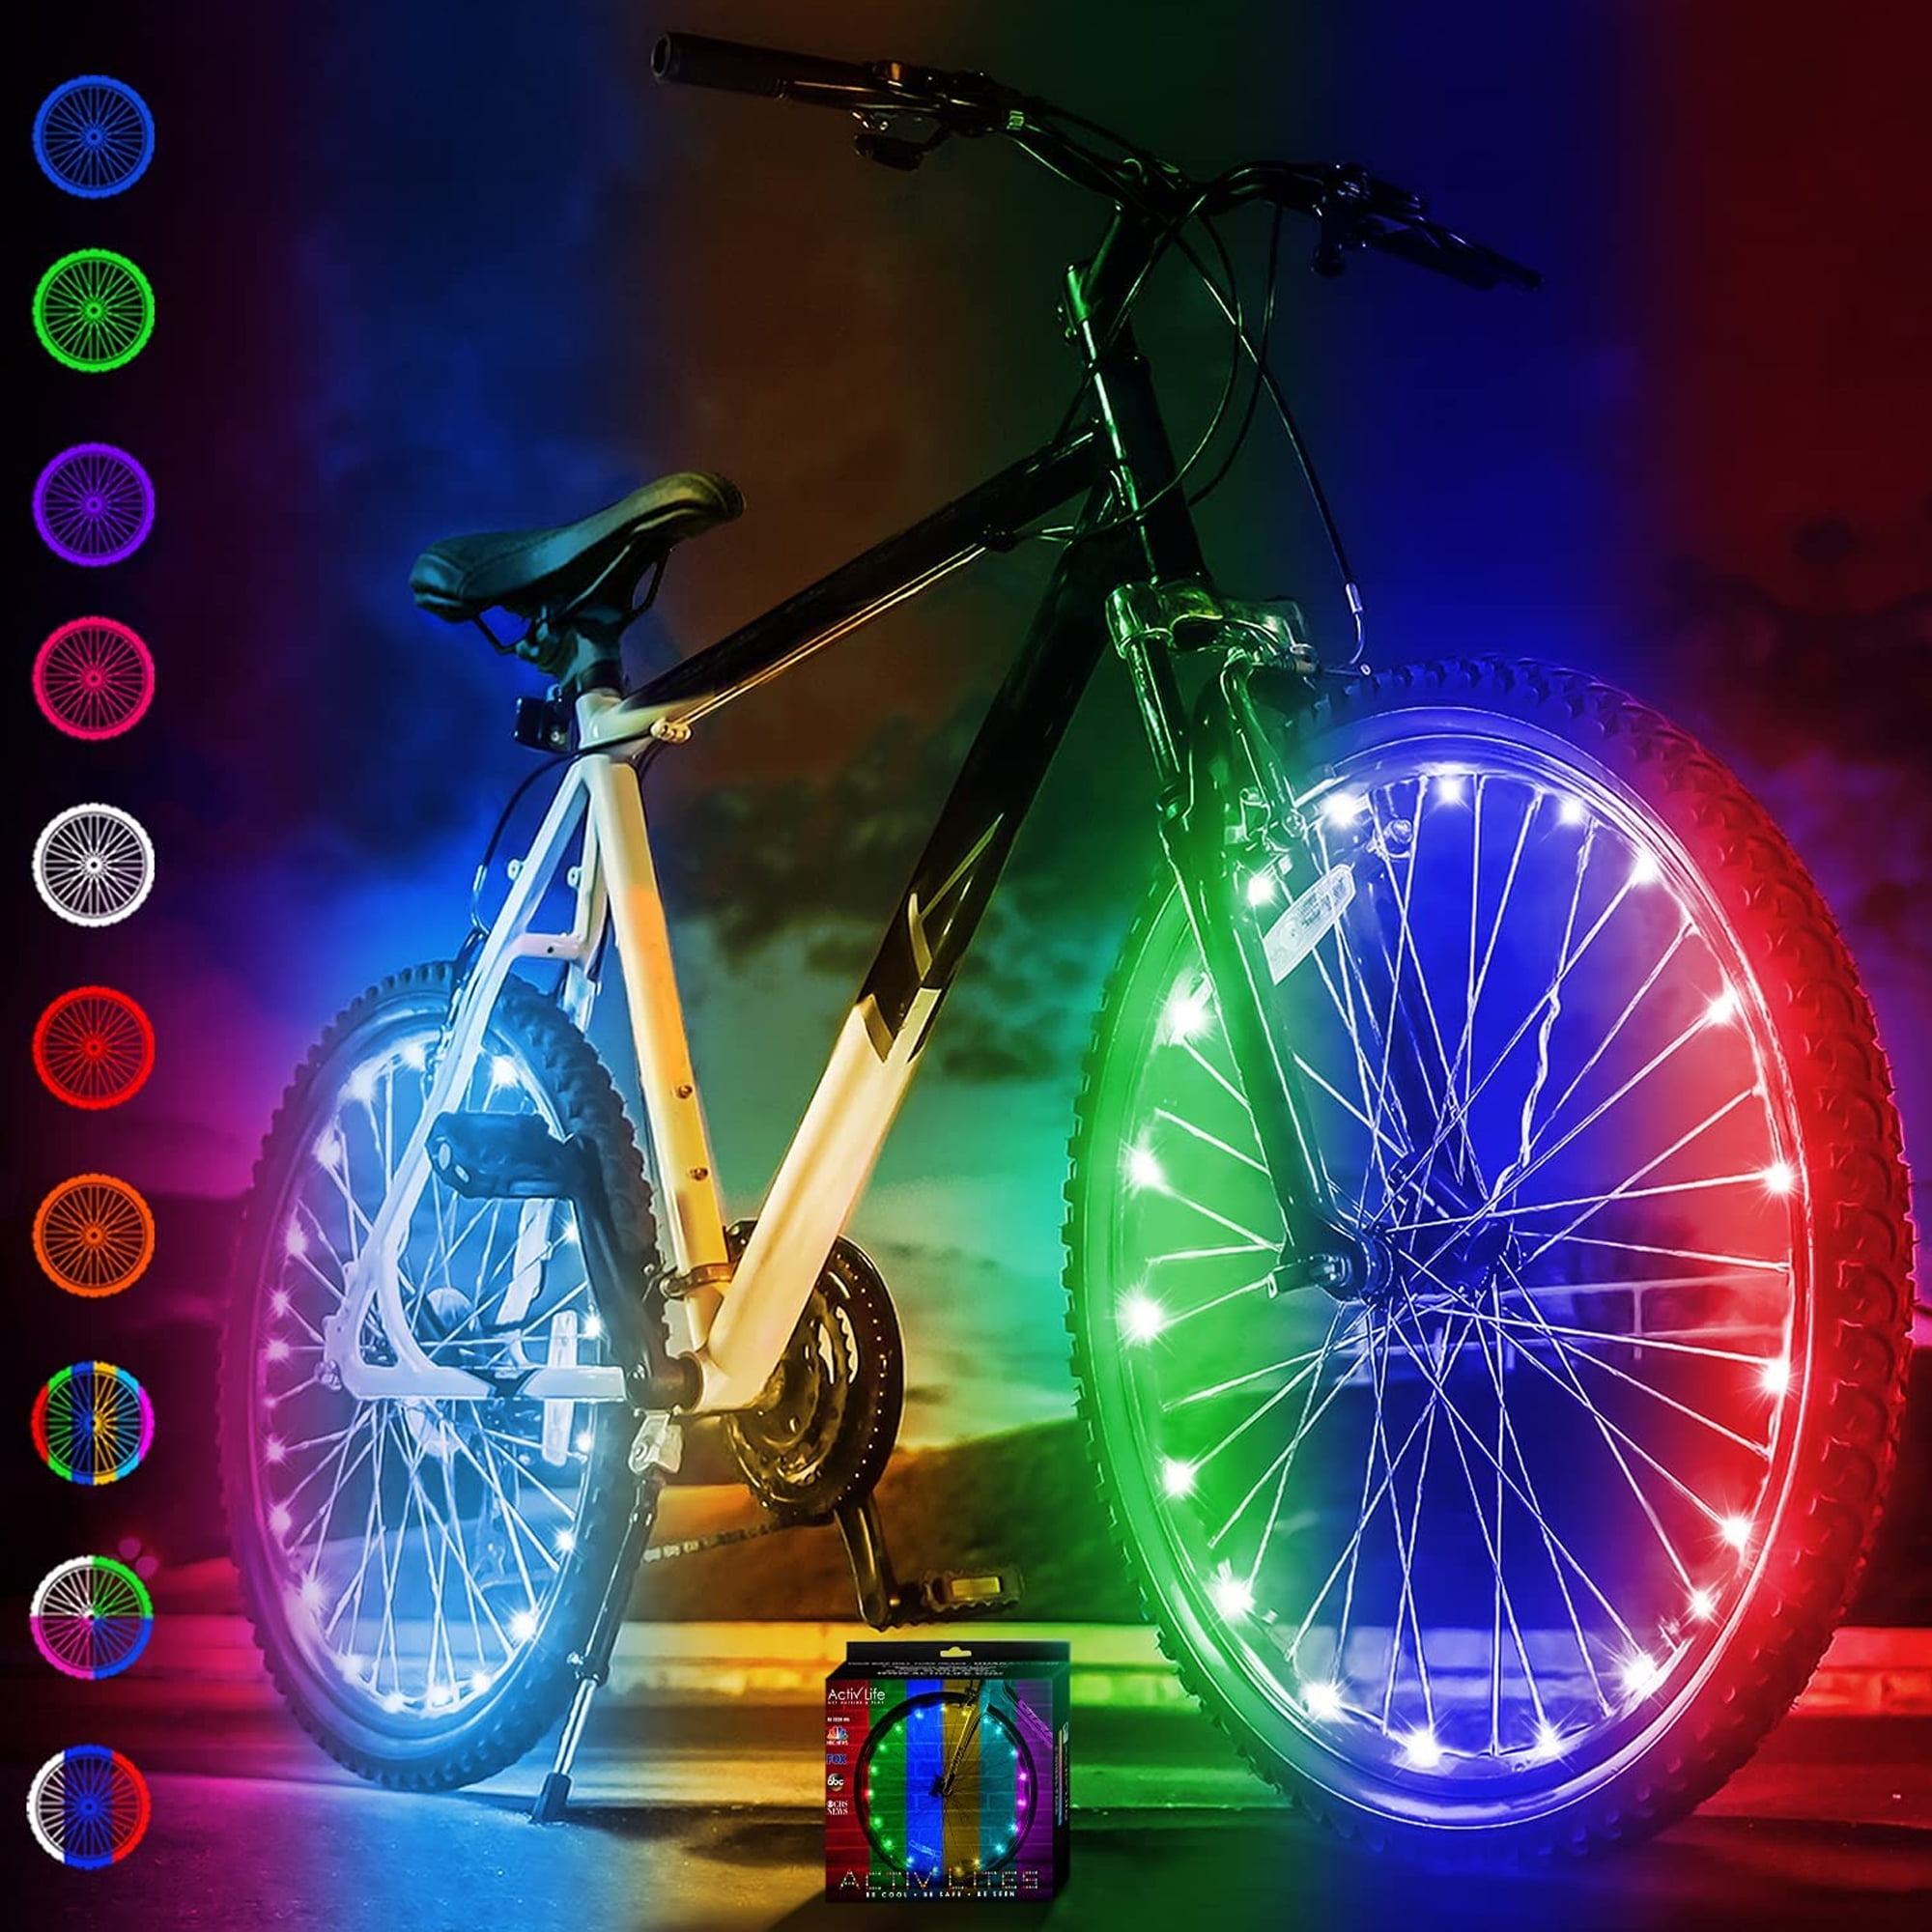 Waterproof LED Bike Spoke Lights for Adult Bike/Kids Bike Night Riding 2-Tire Pack Bike Wheel Lights 7 Colors LED Outdoor Bicycle Tire Safety Light Bike Spoke Decorations 